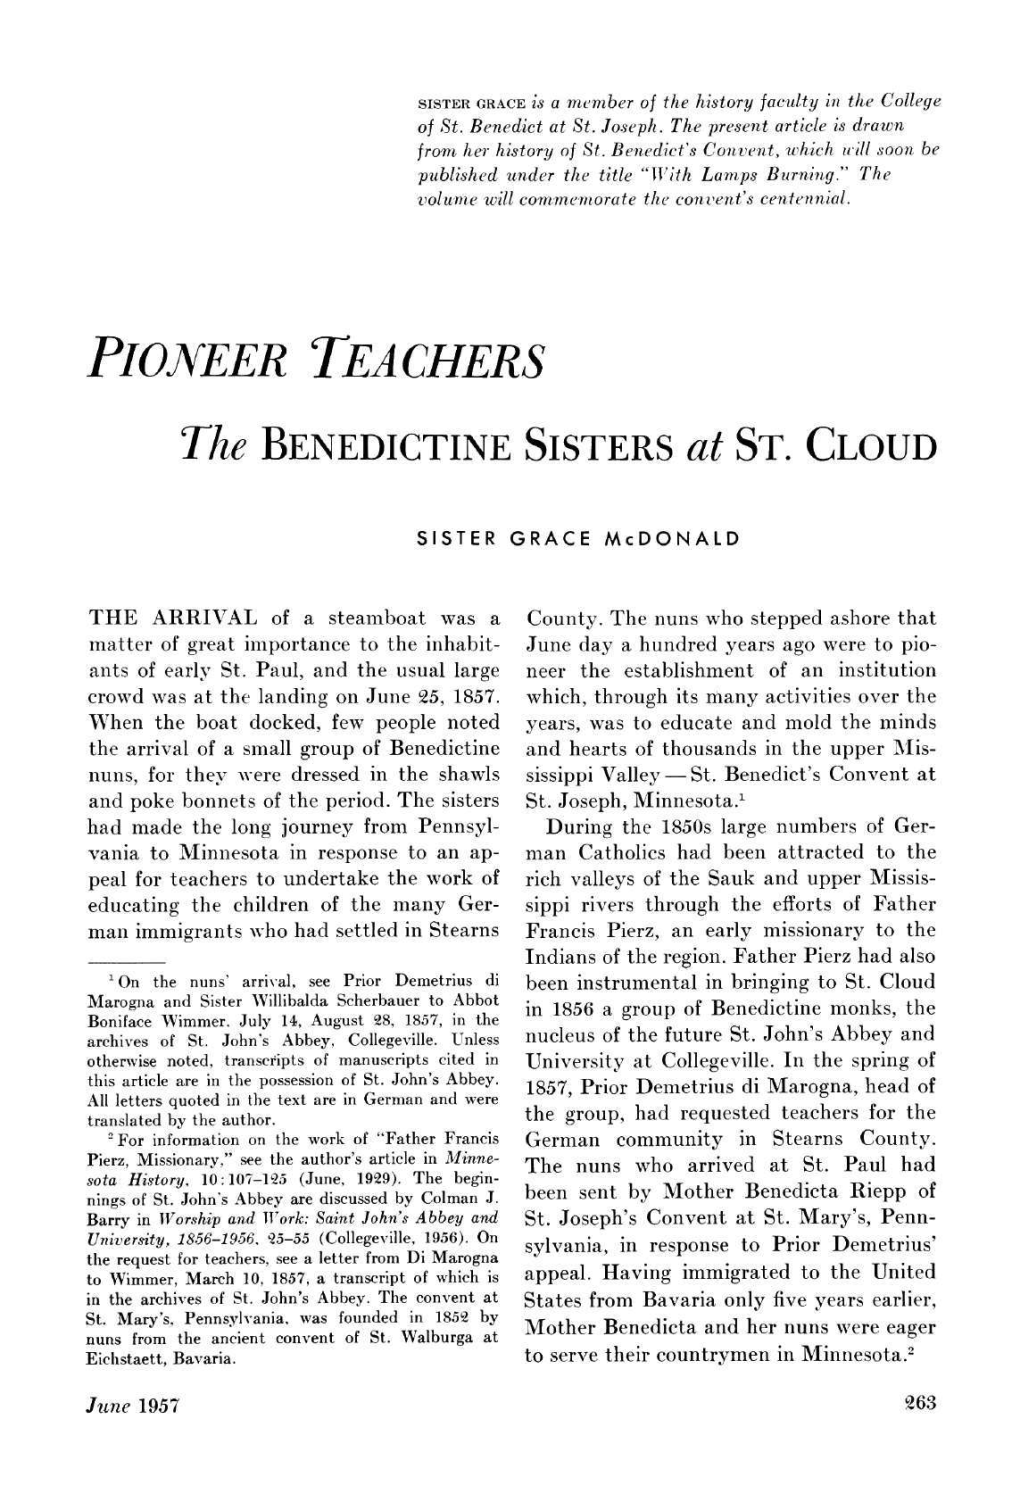 The Benedictine Sisters at St. Cloud / Sister Grace Mcdonald